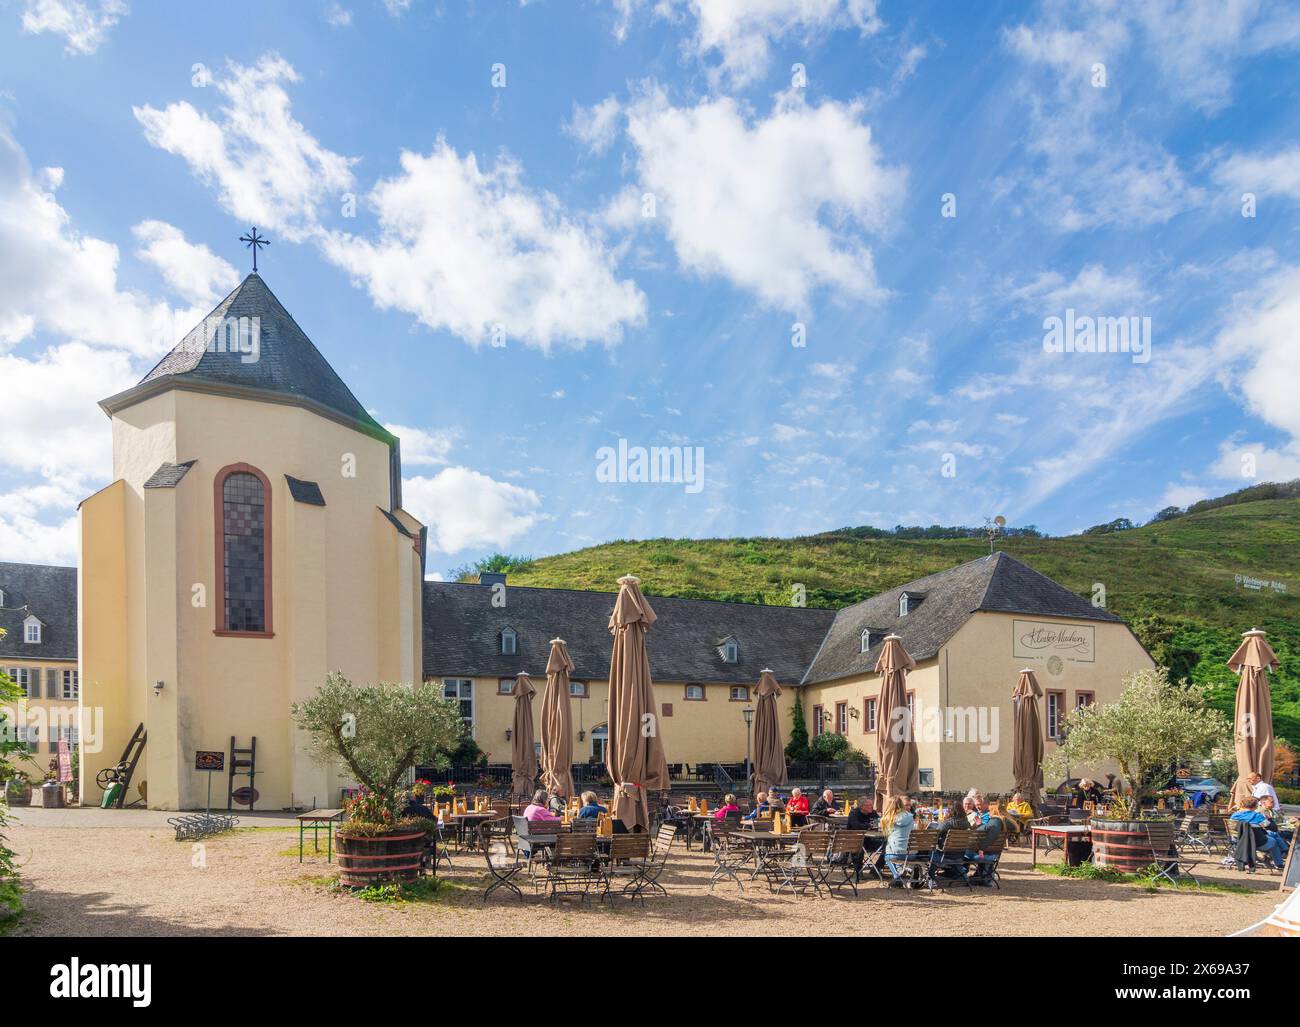 Bernkastel-Kues, ancienne abbaye de Machern, restaurant en plein air, région de Moselle, Rhénanie-Palatinat, Allemagne Banque D'Images